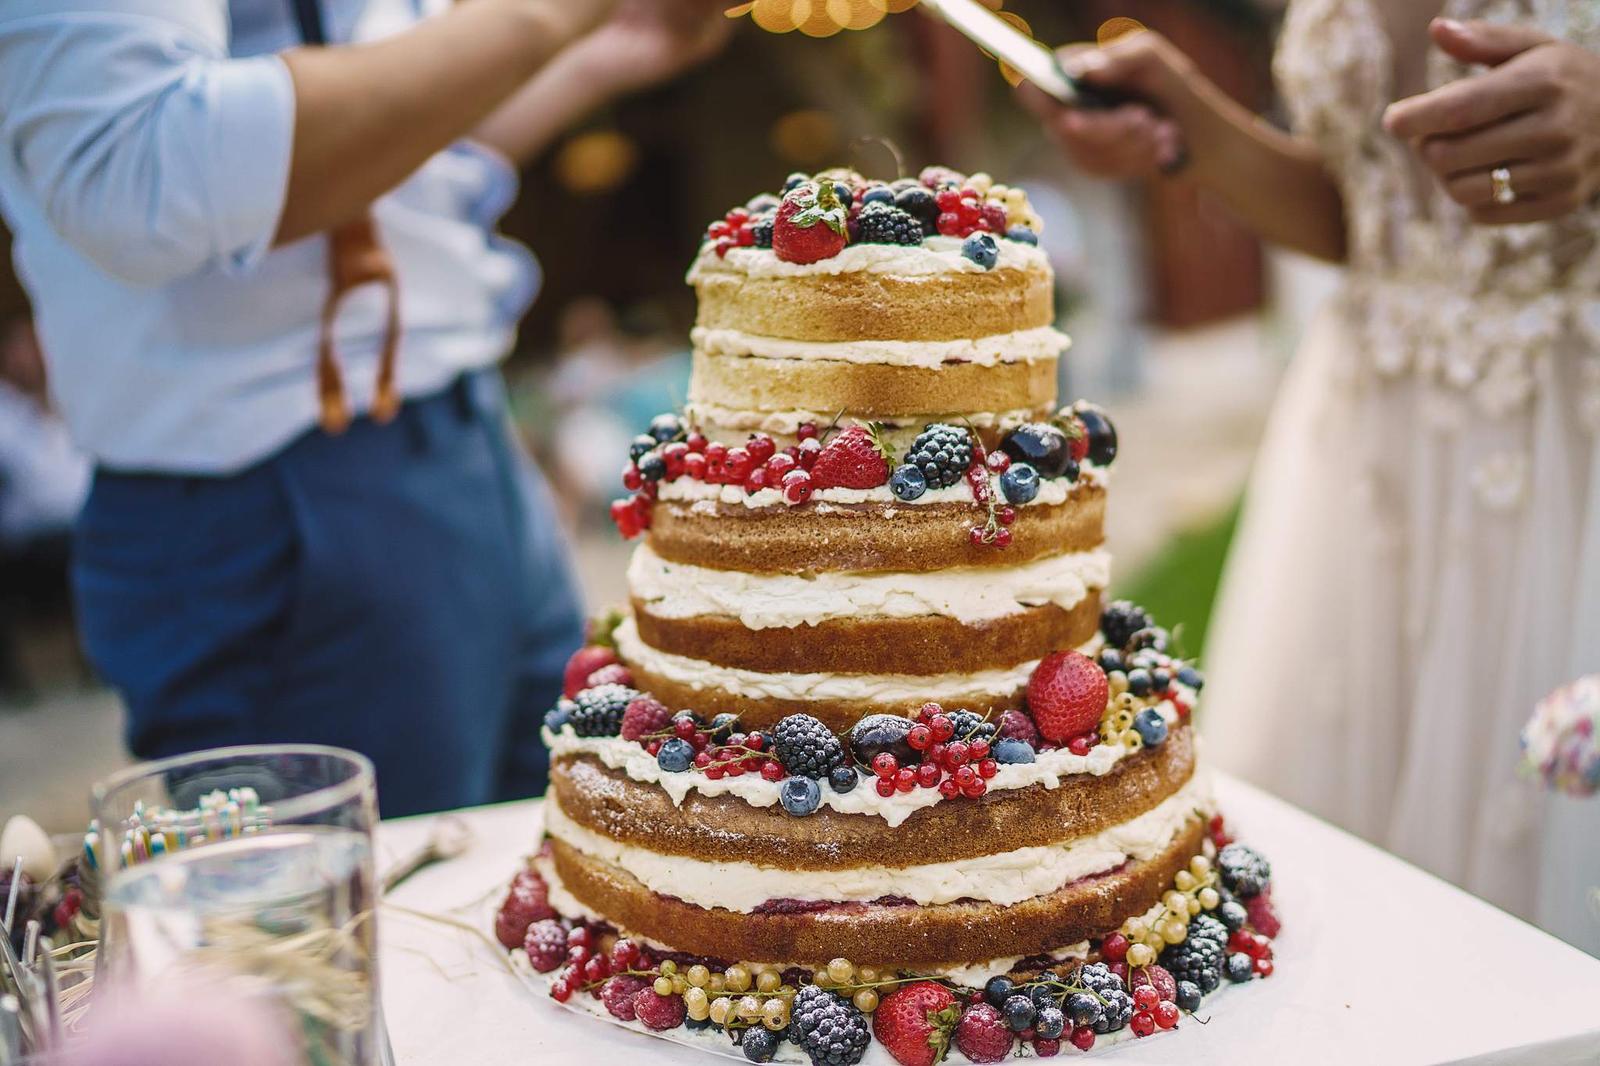 Svatební dort a sladký bar na svatbu 31.7.2018, Kristin 